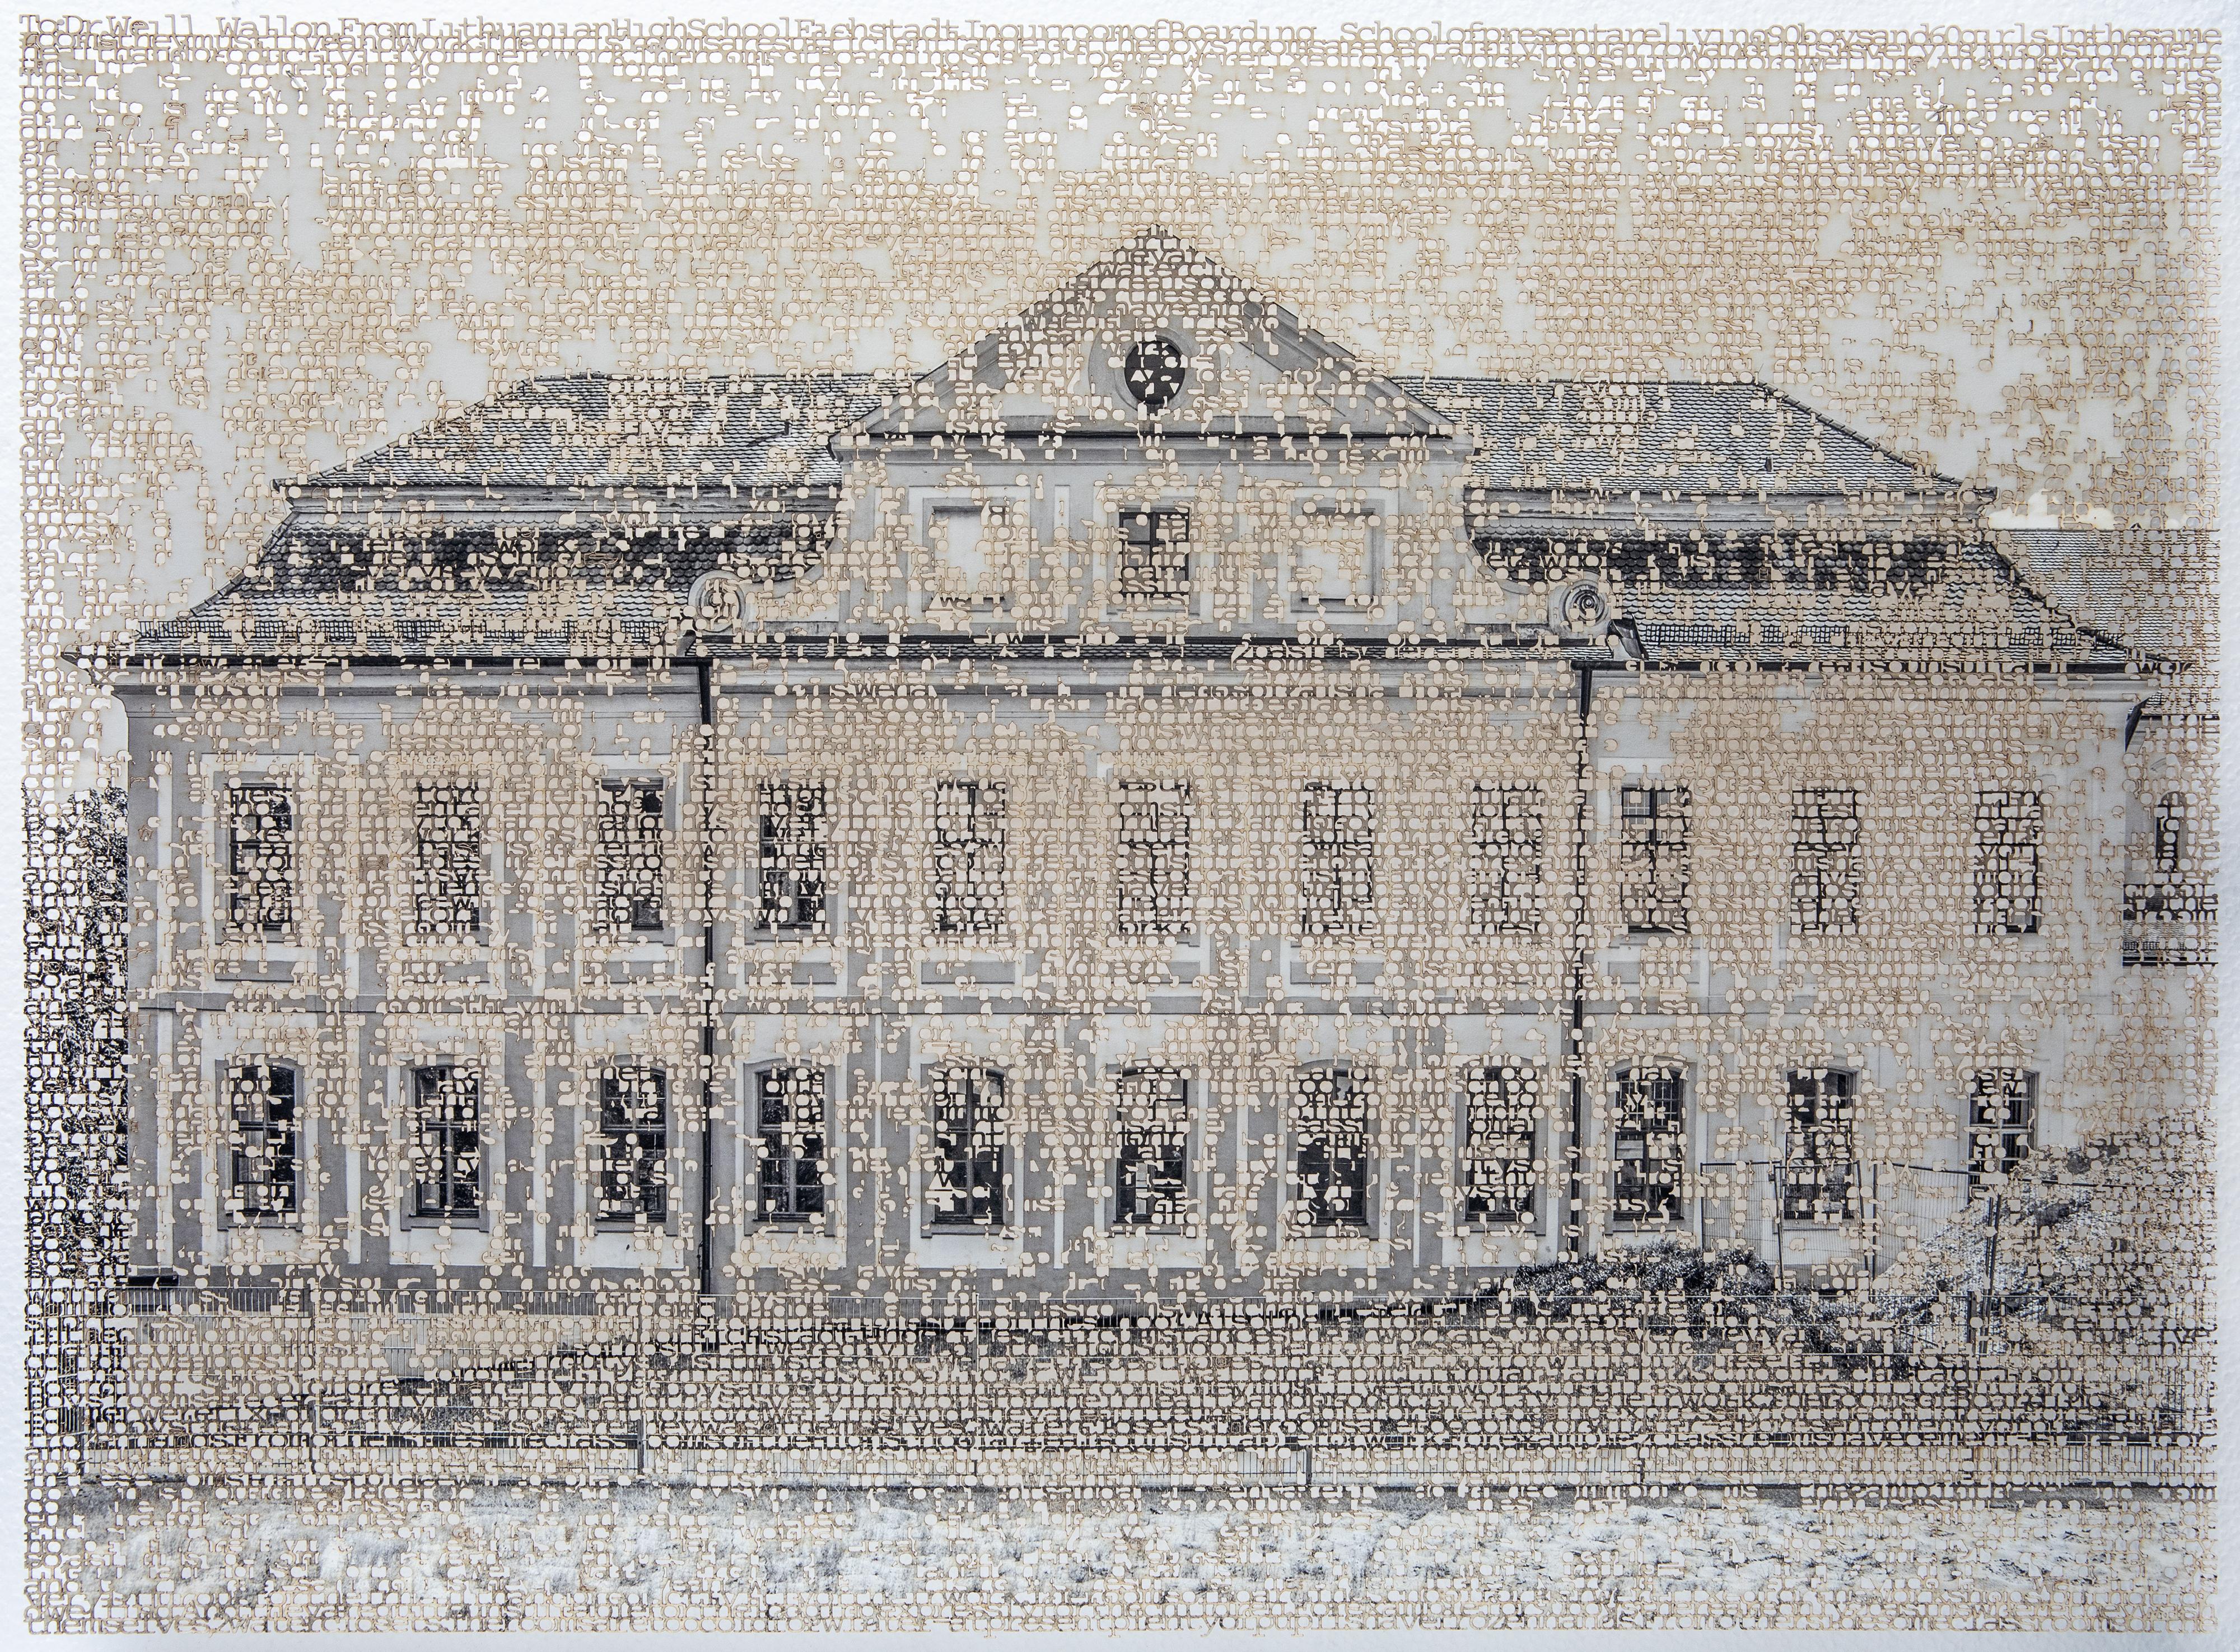 Krista Svalbonas Black and White Photograph - Eichstatt 2, Laser cut archival pigment ink print, signed, numbered, framed 